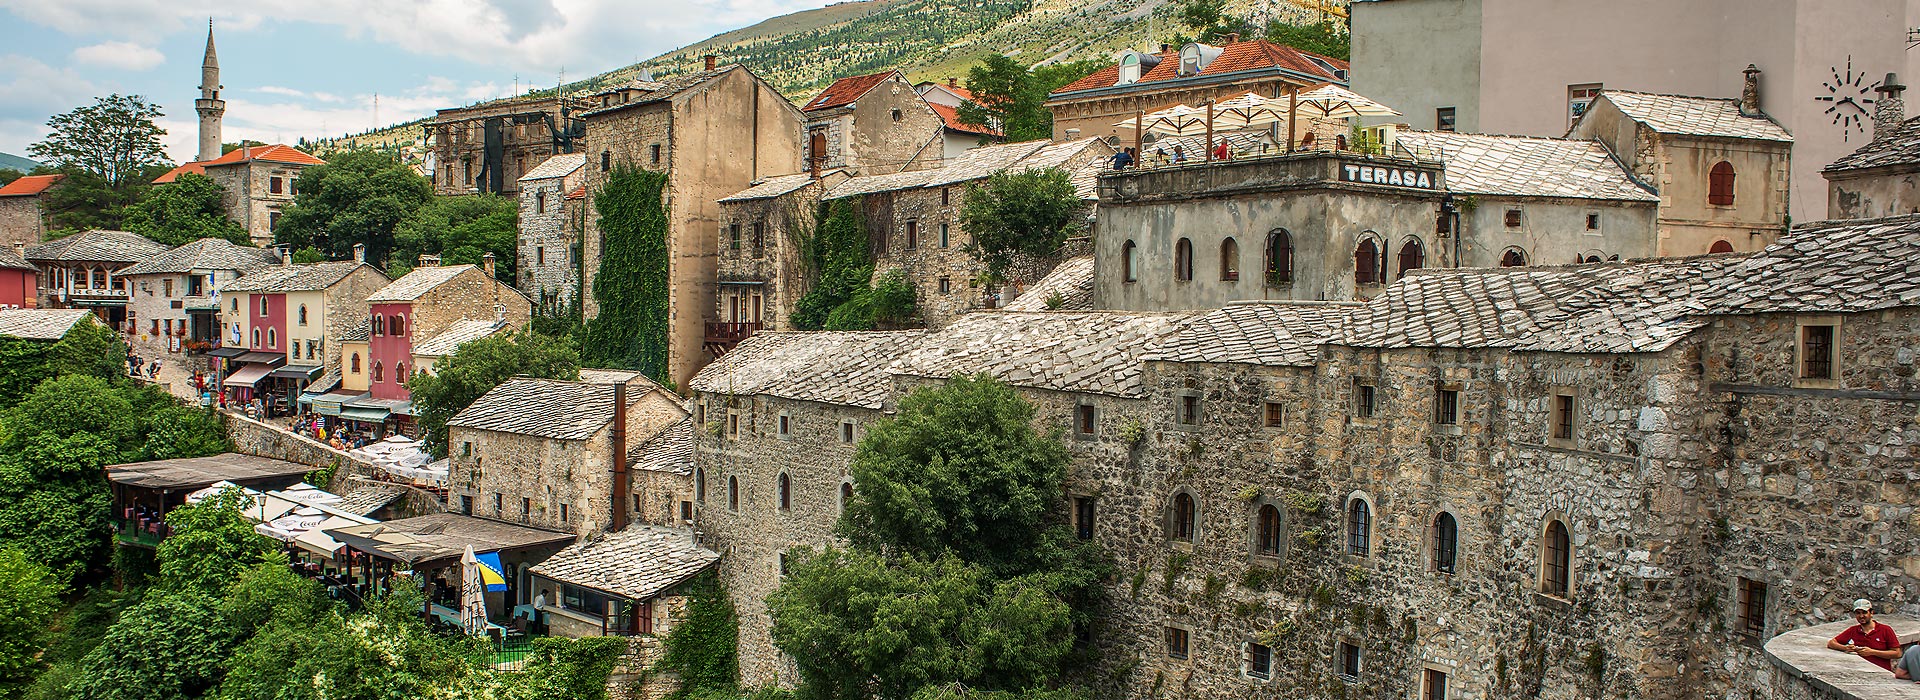 Excursion to Mostar